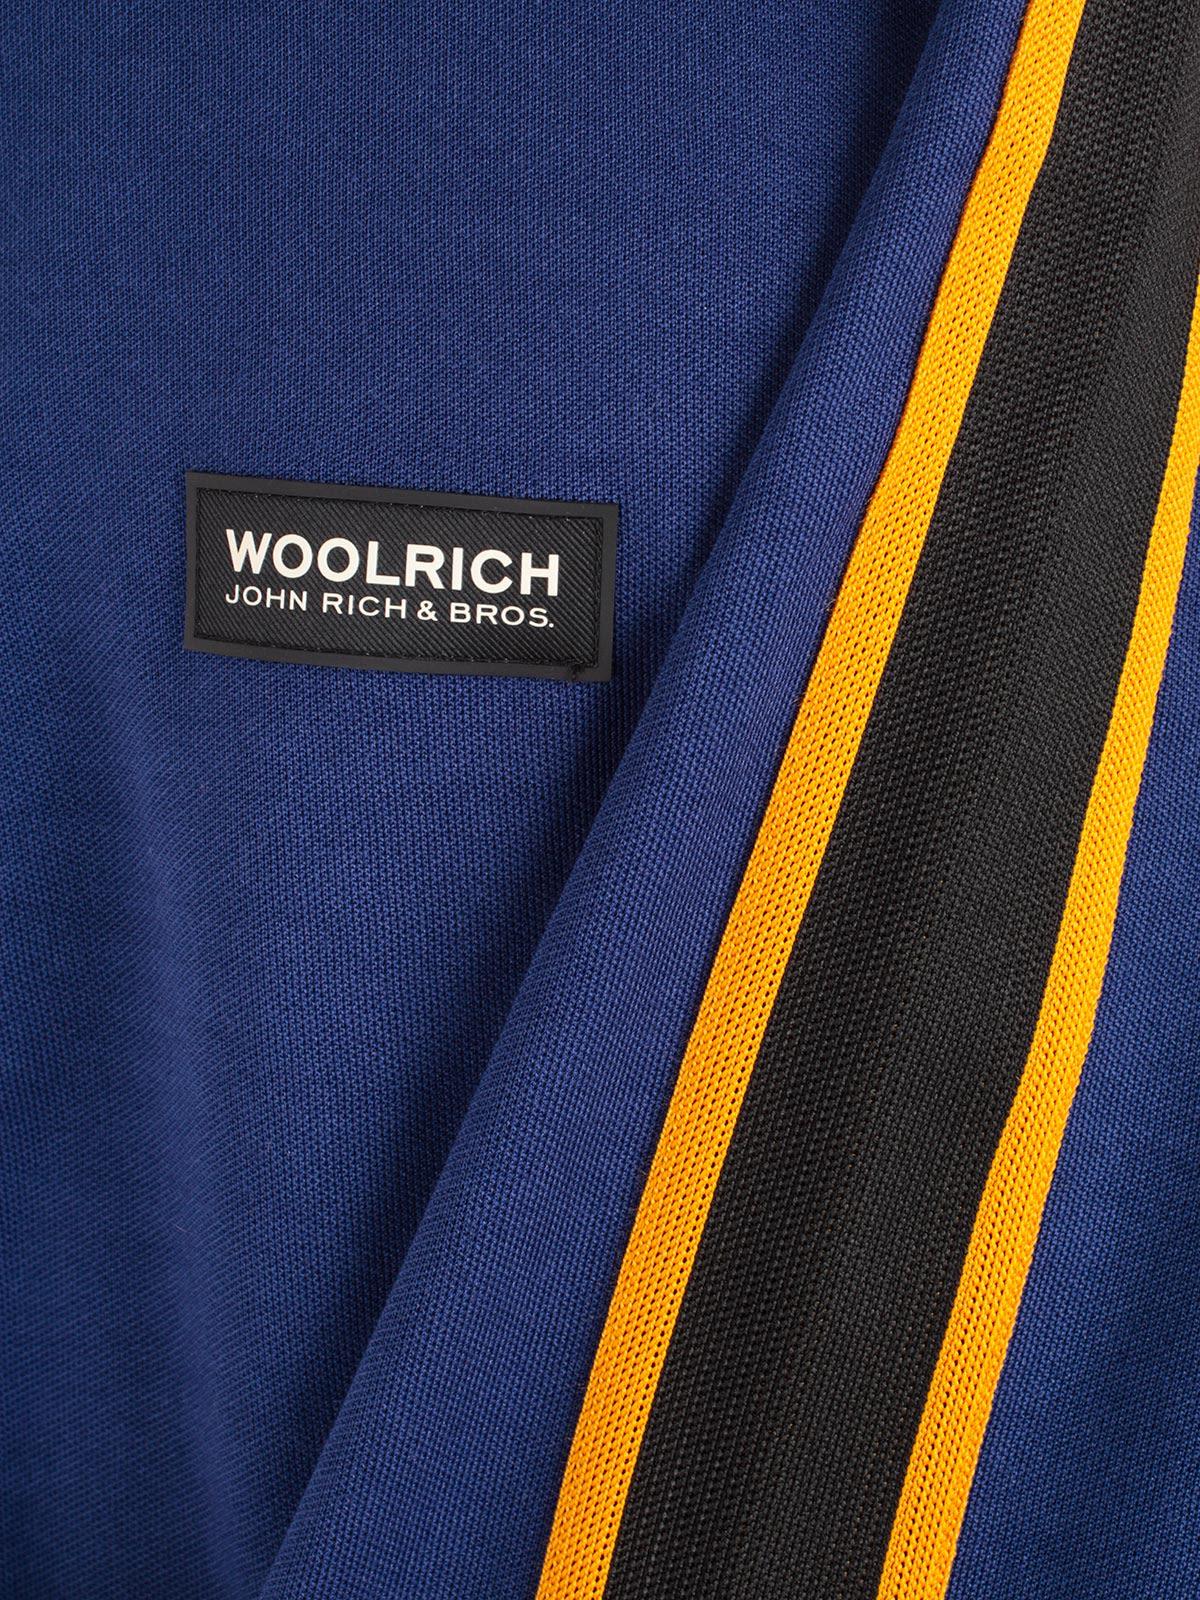 Woolrich Logo - Woolrich Woolrich Logo Jacket - Blue Print - 10784852 | italist